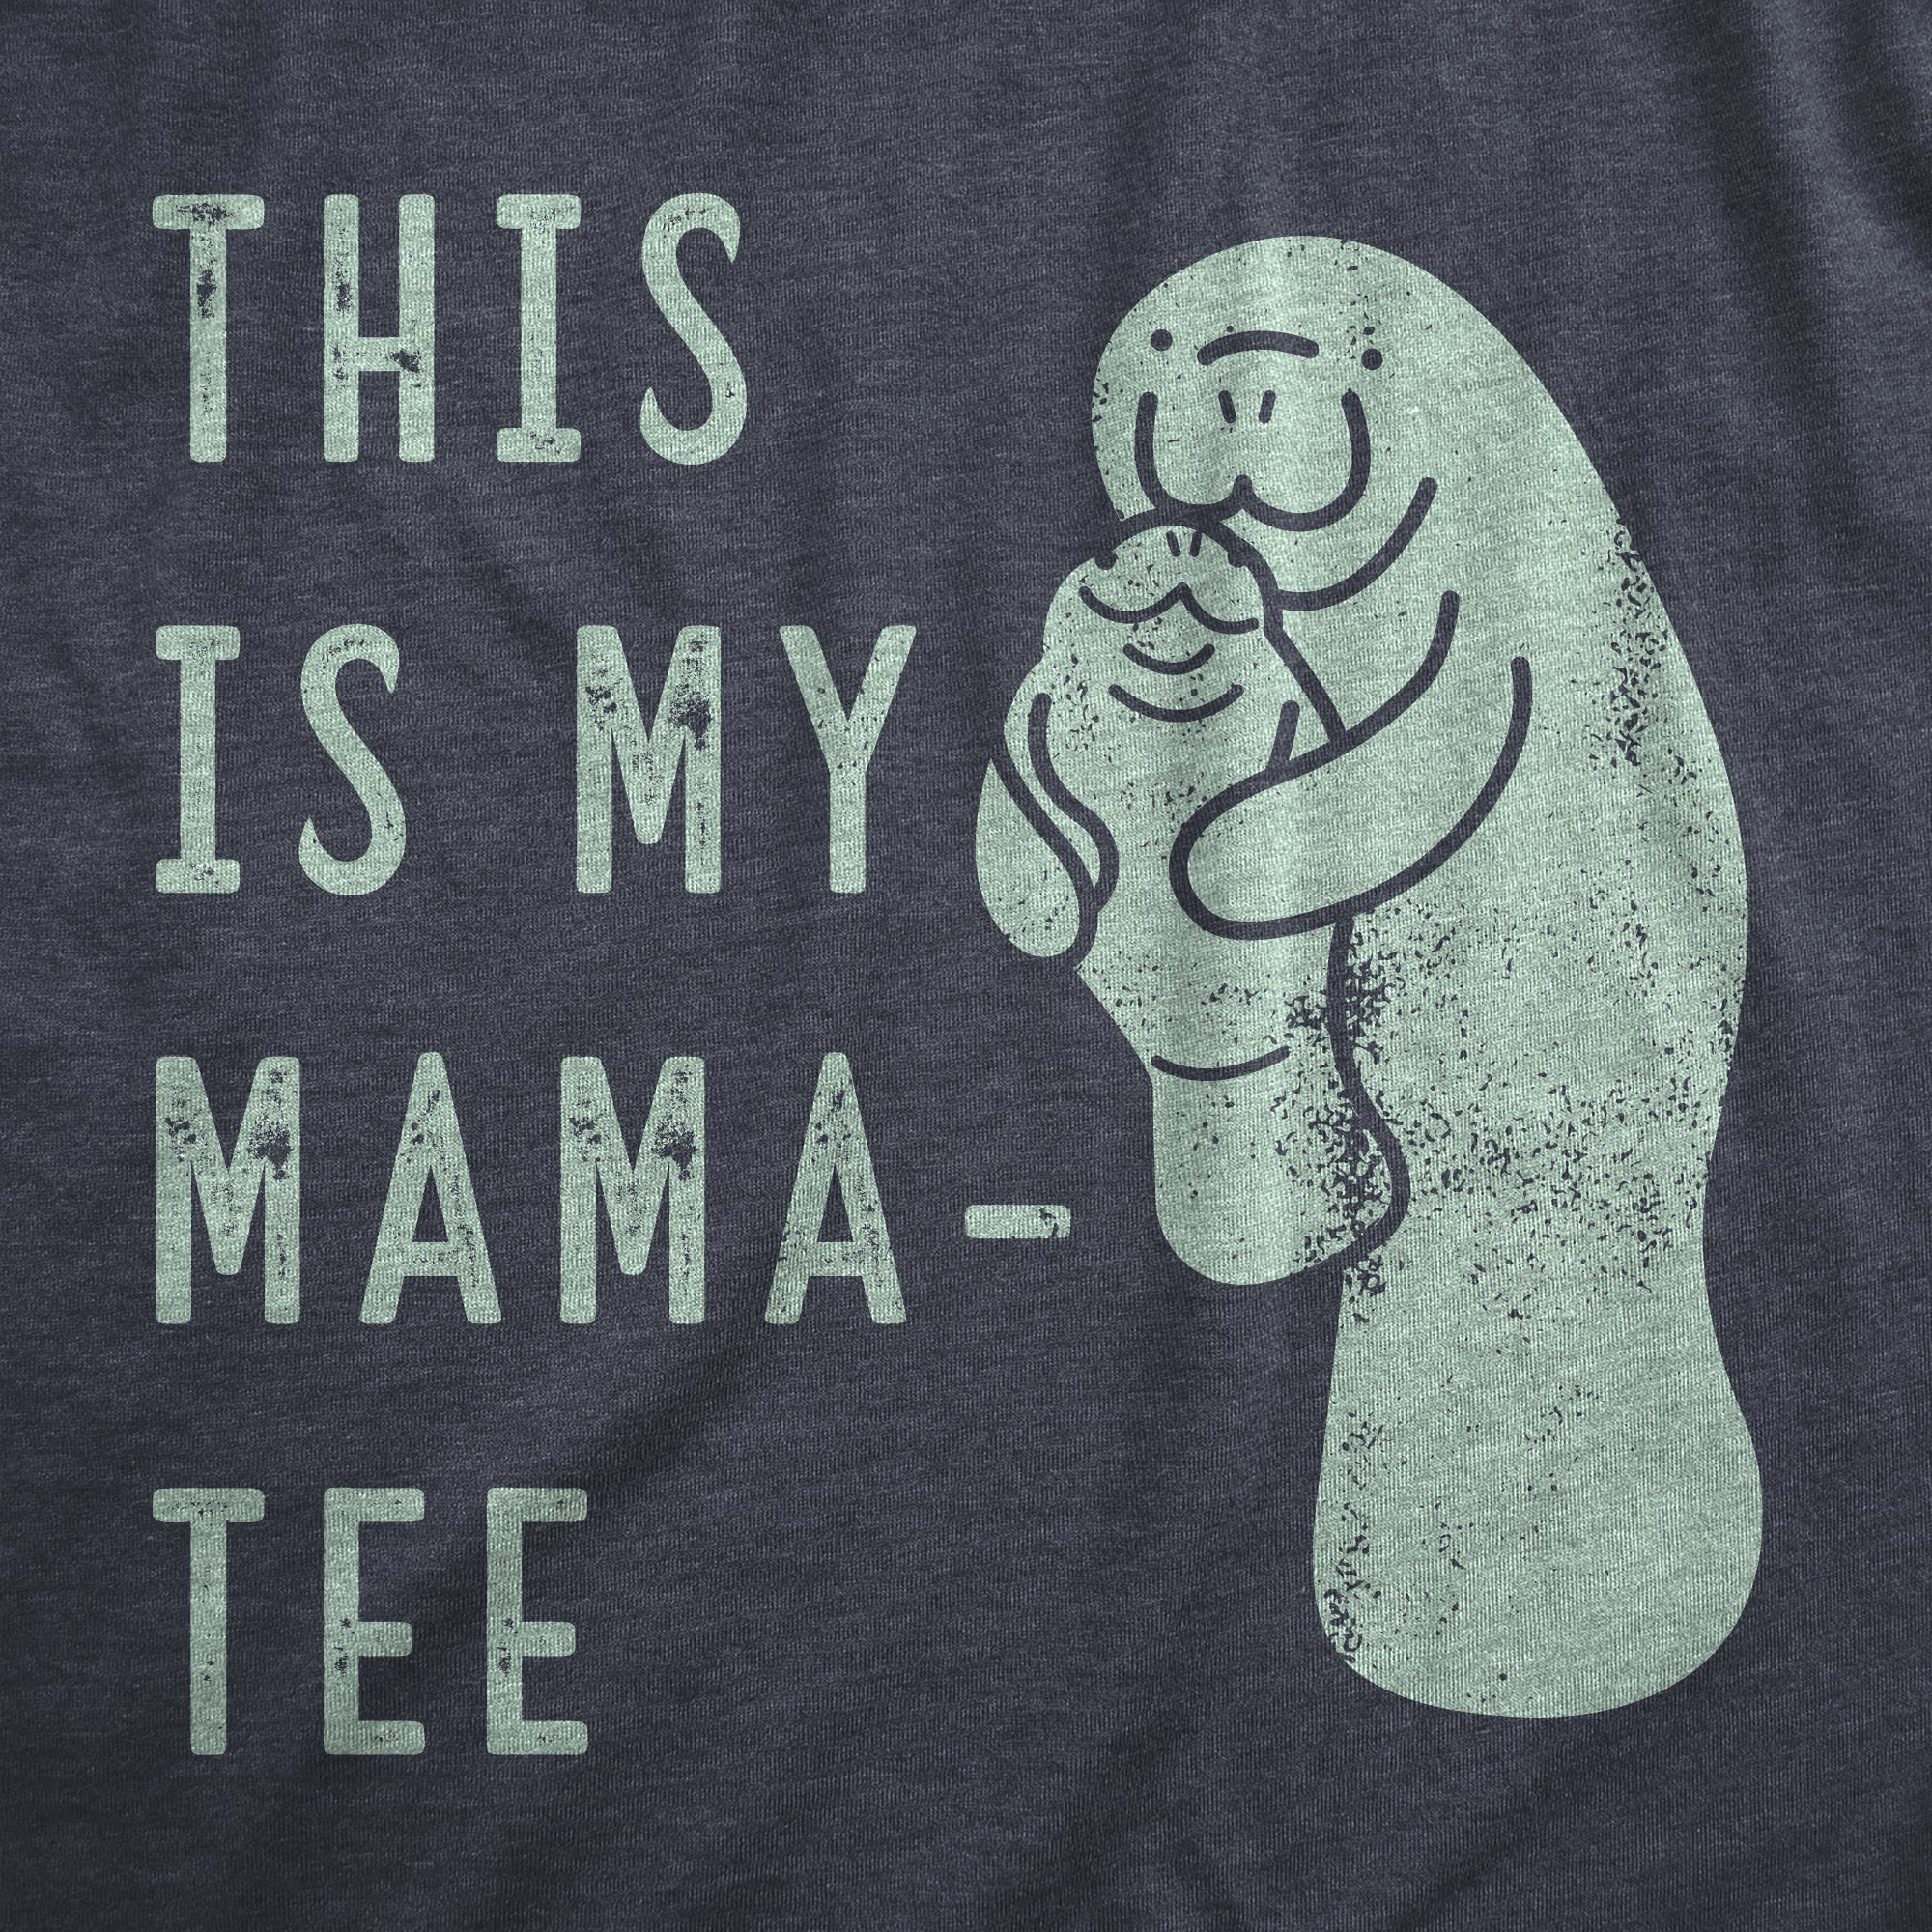 Funny Heather Navy - MAMATEE This Is My Mama Tee Maternity T Shirt Nerdy Animal Tee